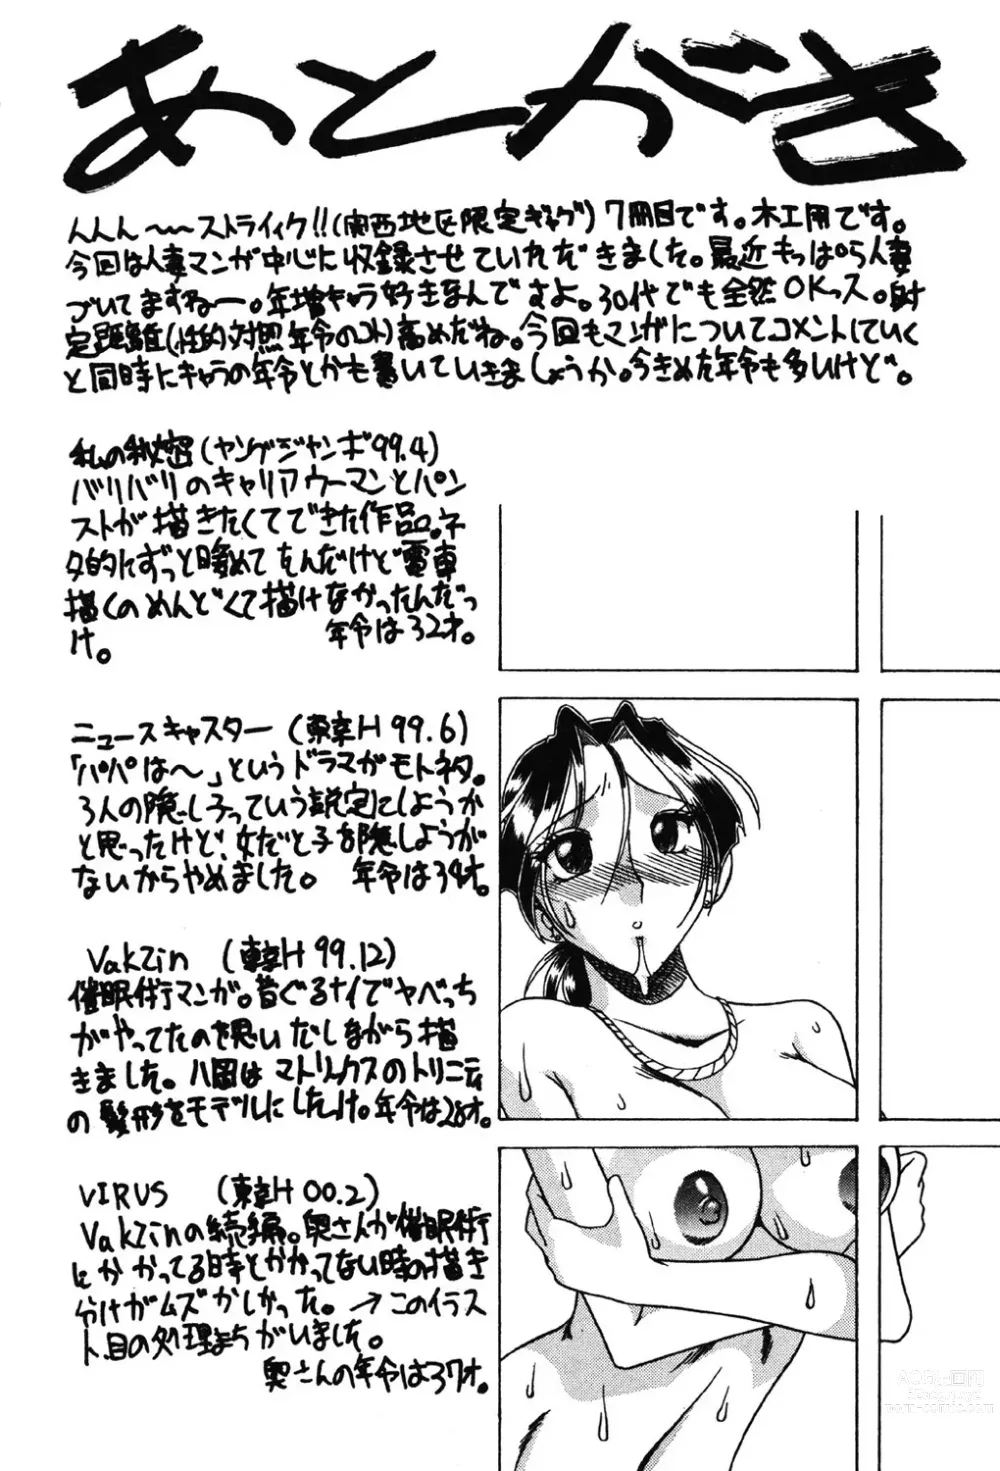 Page 147 of manga Hahaoya Ga Onna Ni Naru Toki